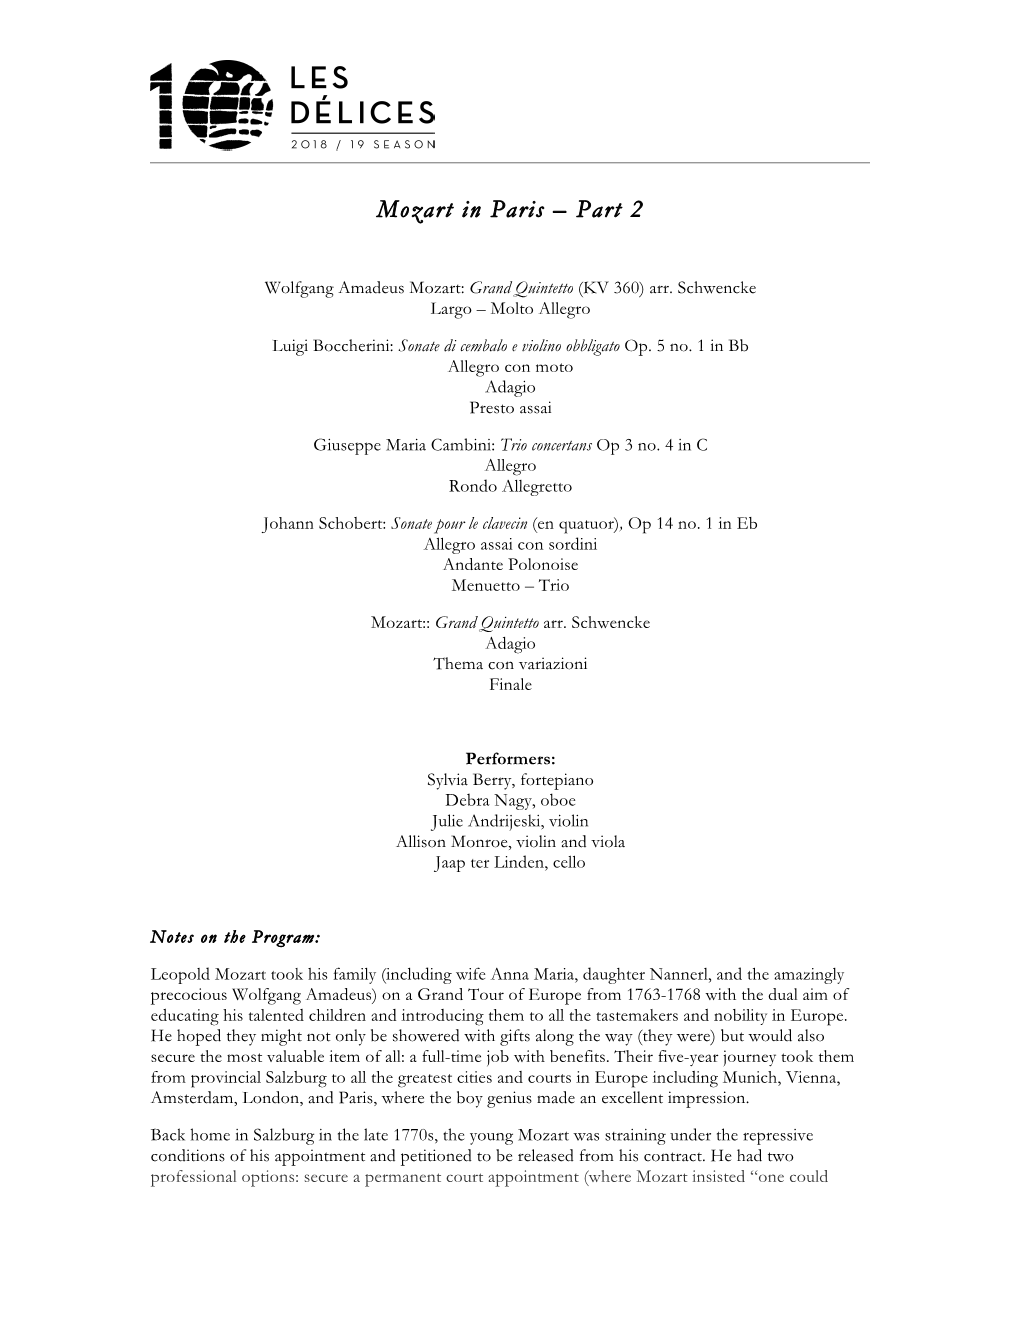 10.18 Mozart in Paris2 Program & Notes